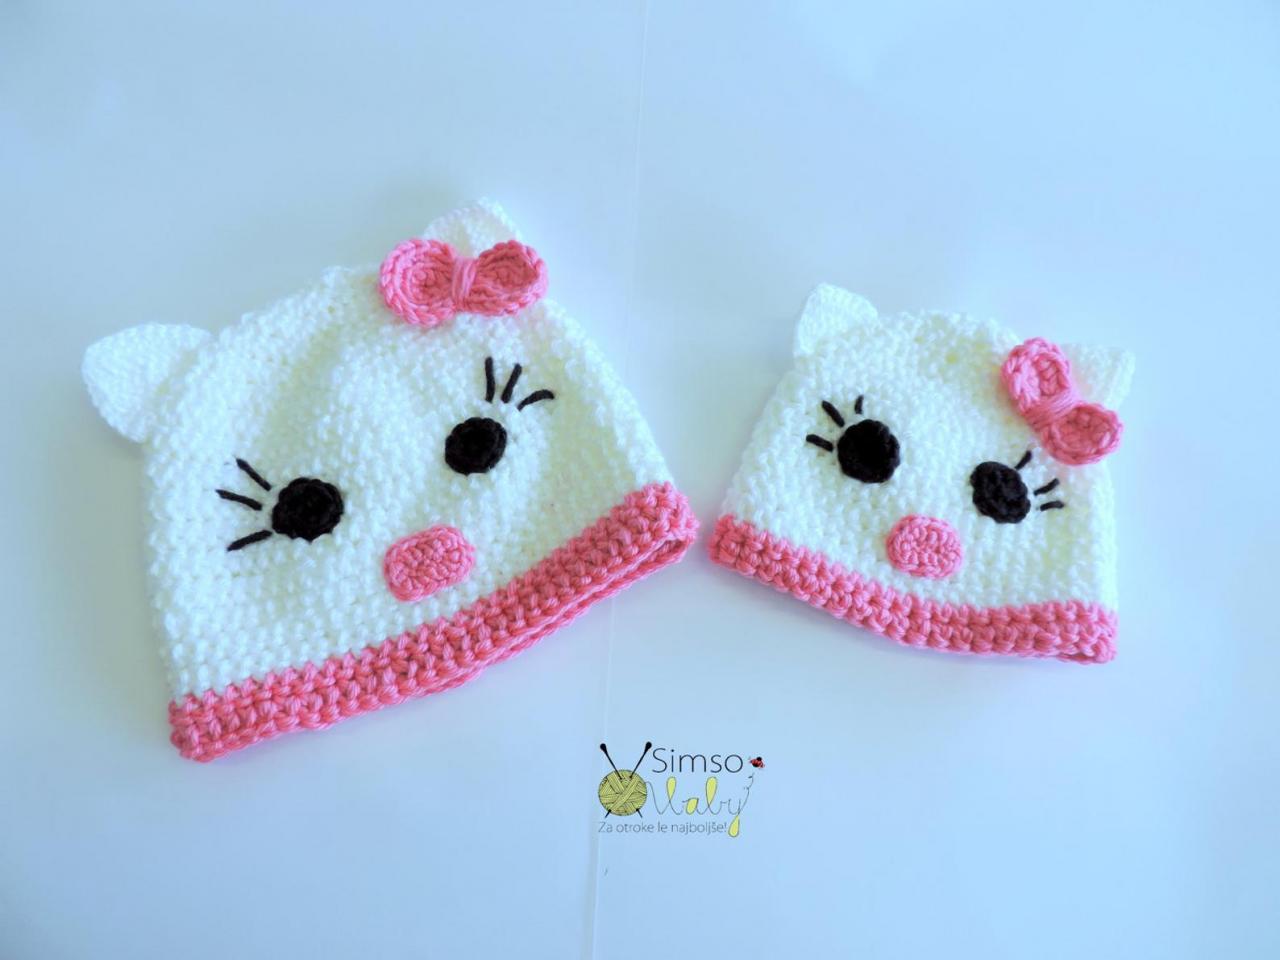 Crochet hat, Kitty, Crochet Kitty hat, Child kitty hat, Baby kitty hat, Kitty hat for baby, Hat for toddlers,